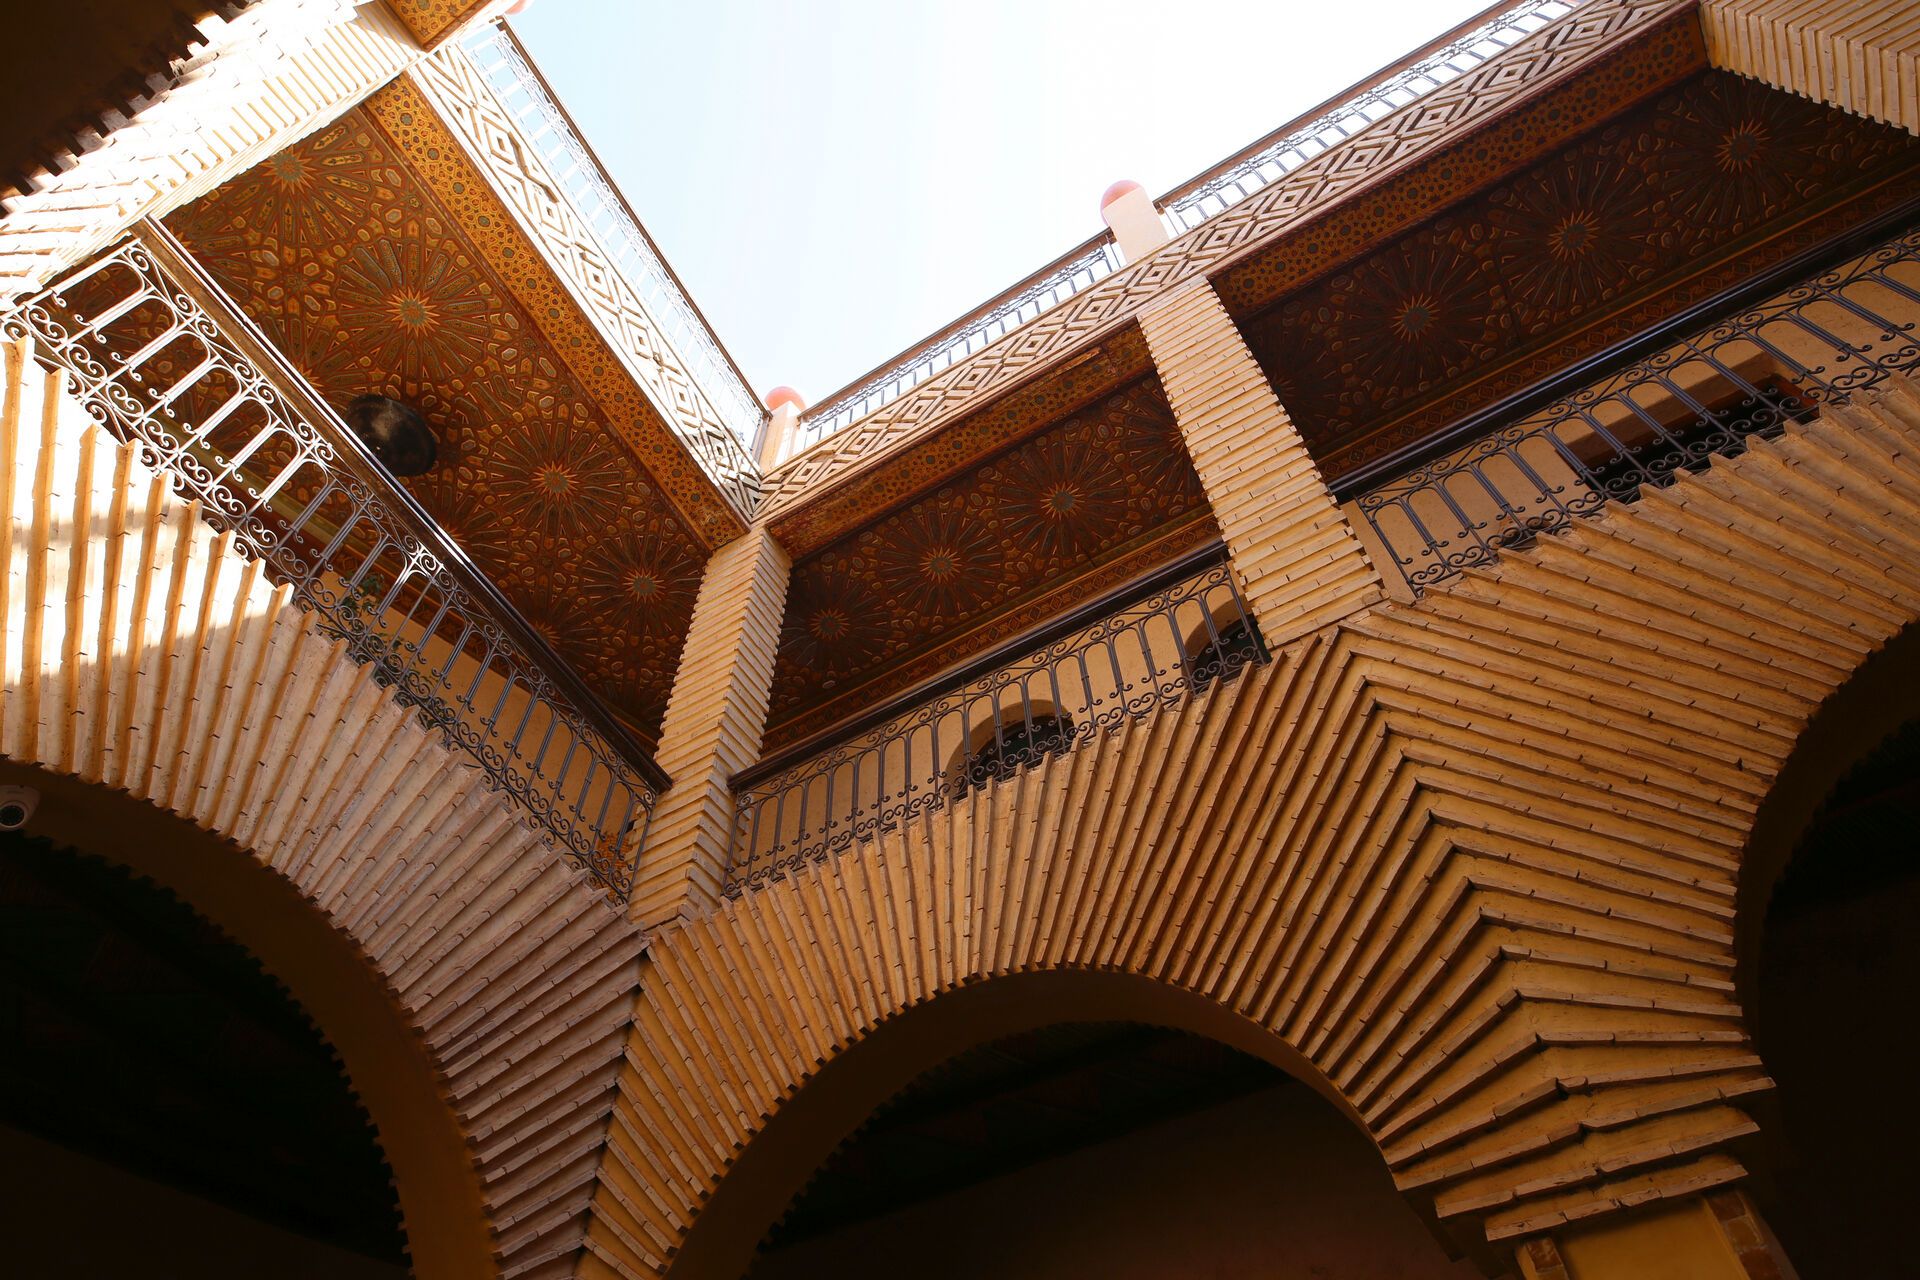 Maroc - Marrakech - Hôtel Kasbah Le Mirage 4*